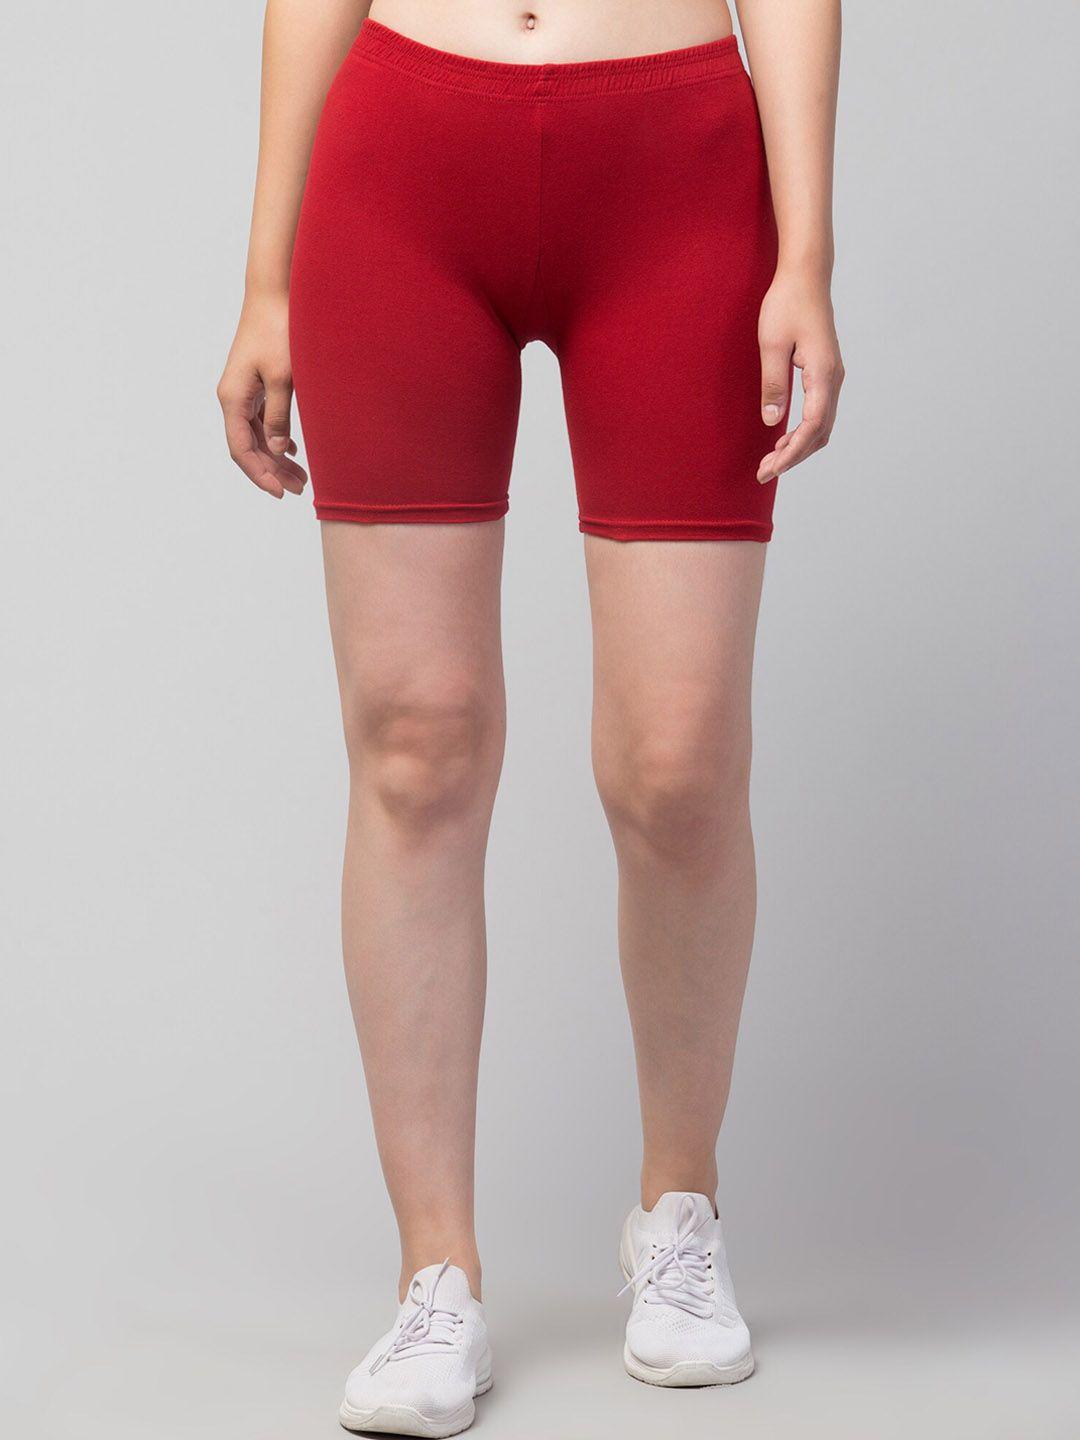 apraa & parma women maroon cycling sports shorts